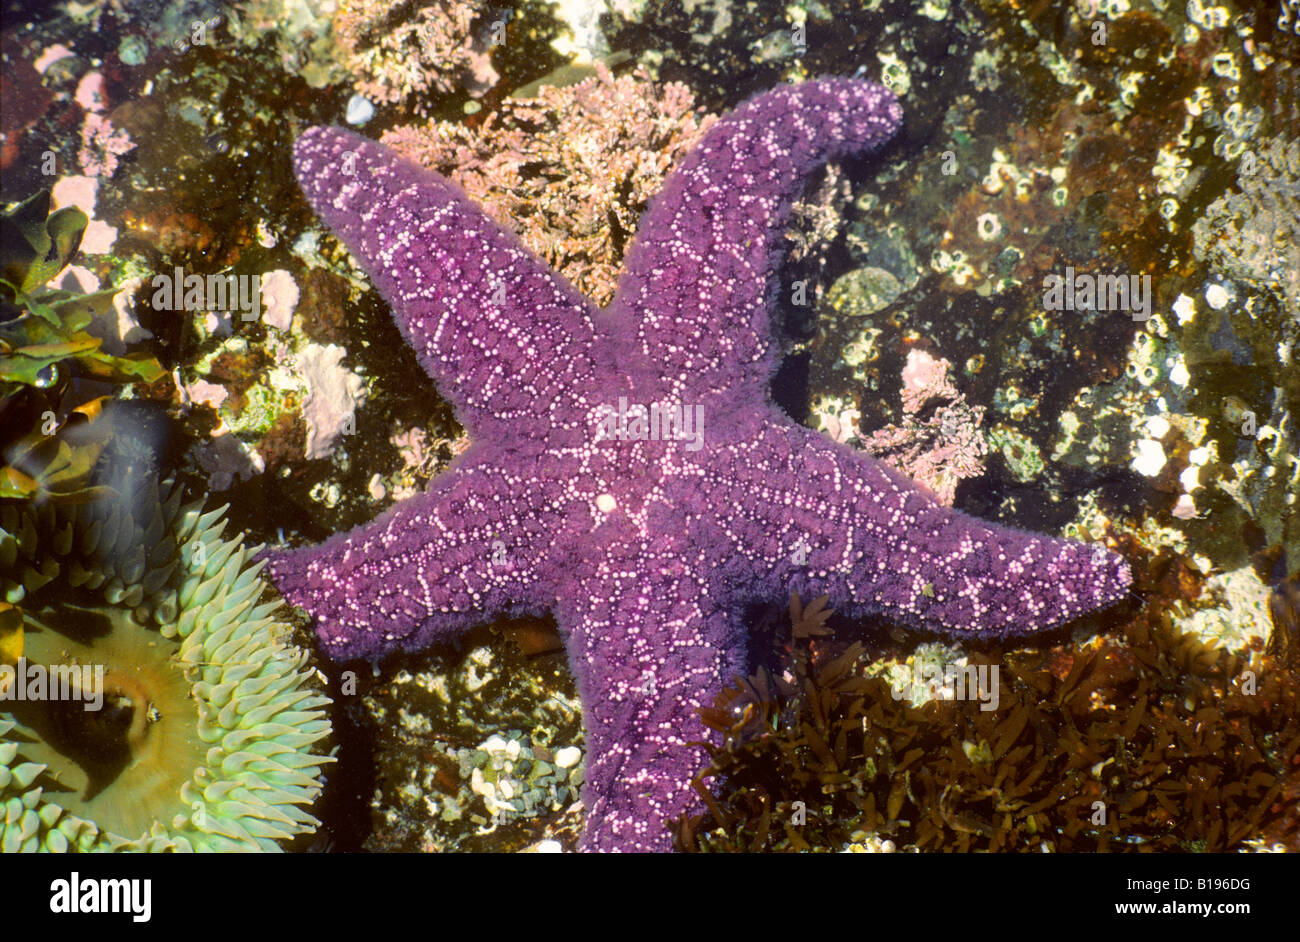 Sea star and anemone, intertidal zone, Pacific Rim National Park, British Columbia, Canada. Stock Photo